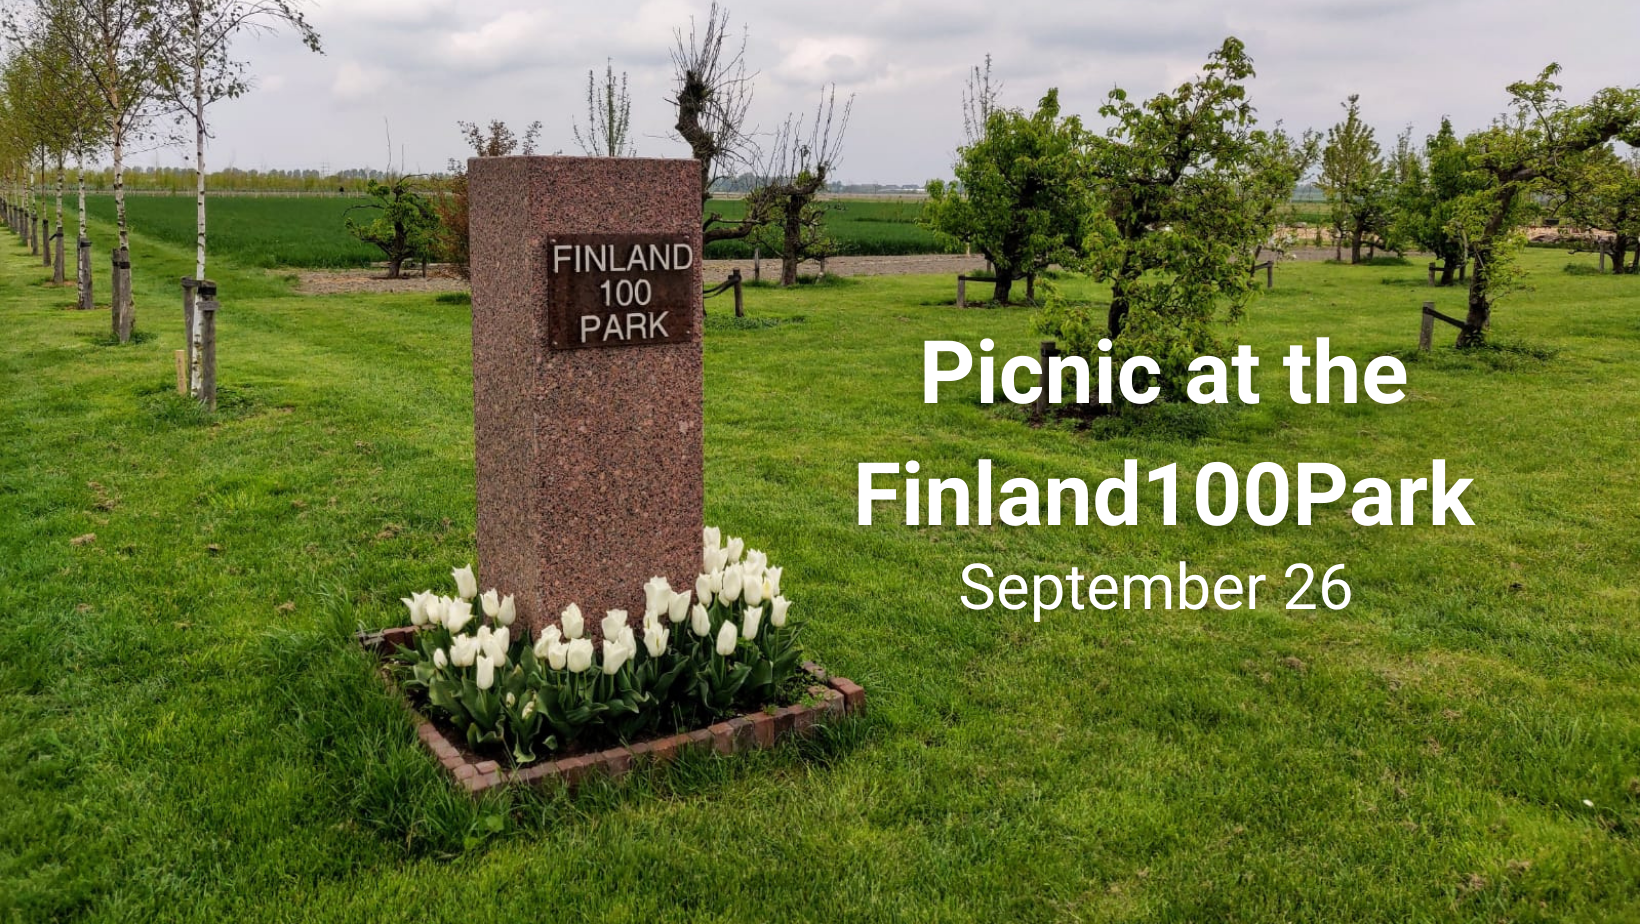 Finland100Park Picnic